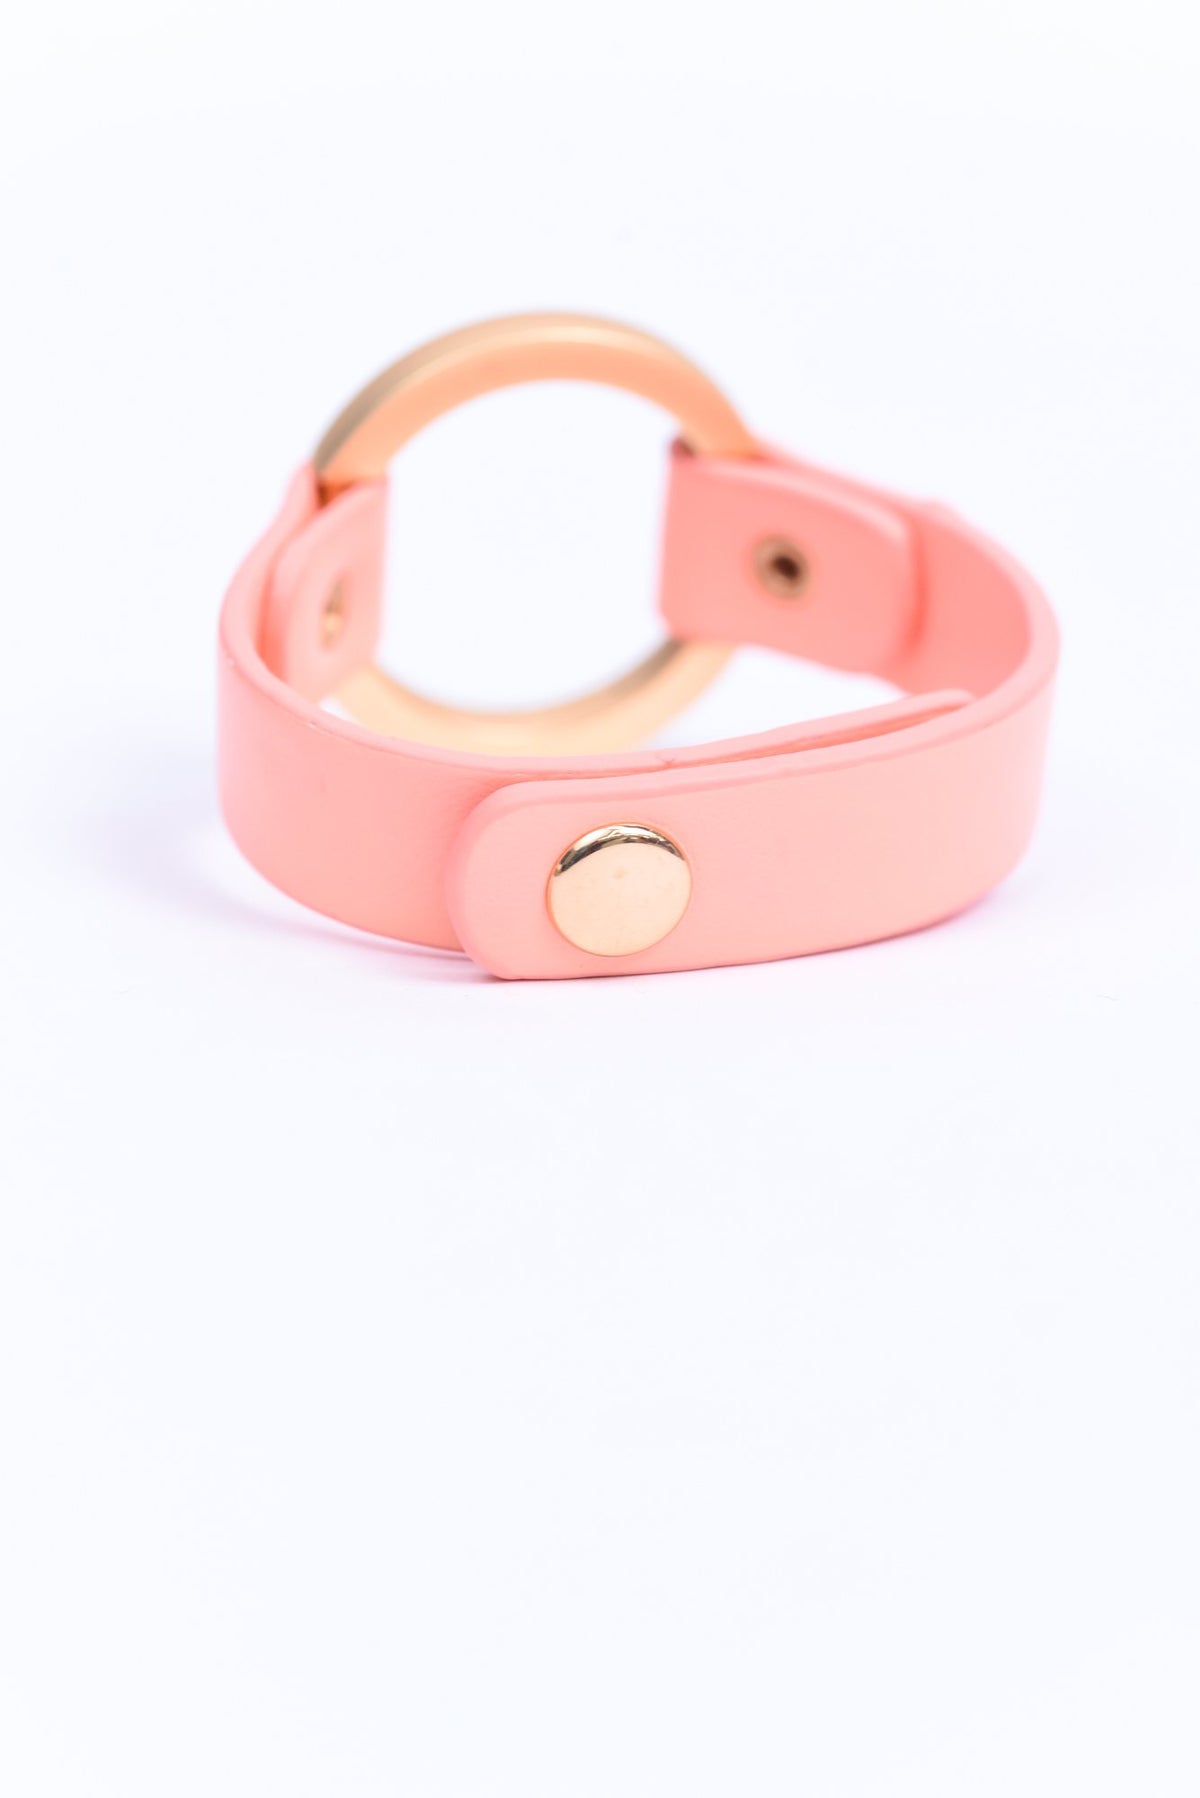 Peach/Gold Open Circle Snap Closure Bracelet - BRC2989PE